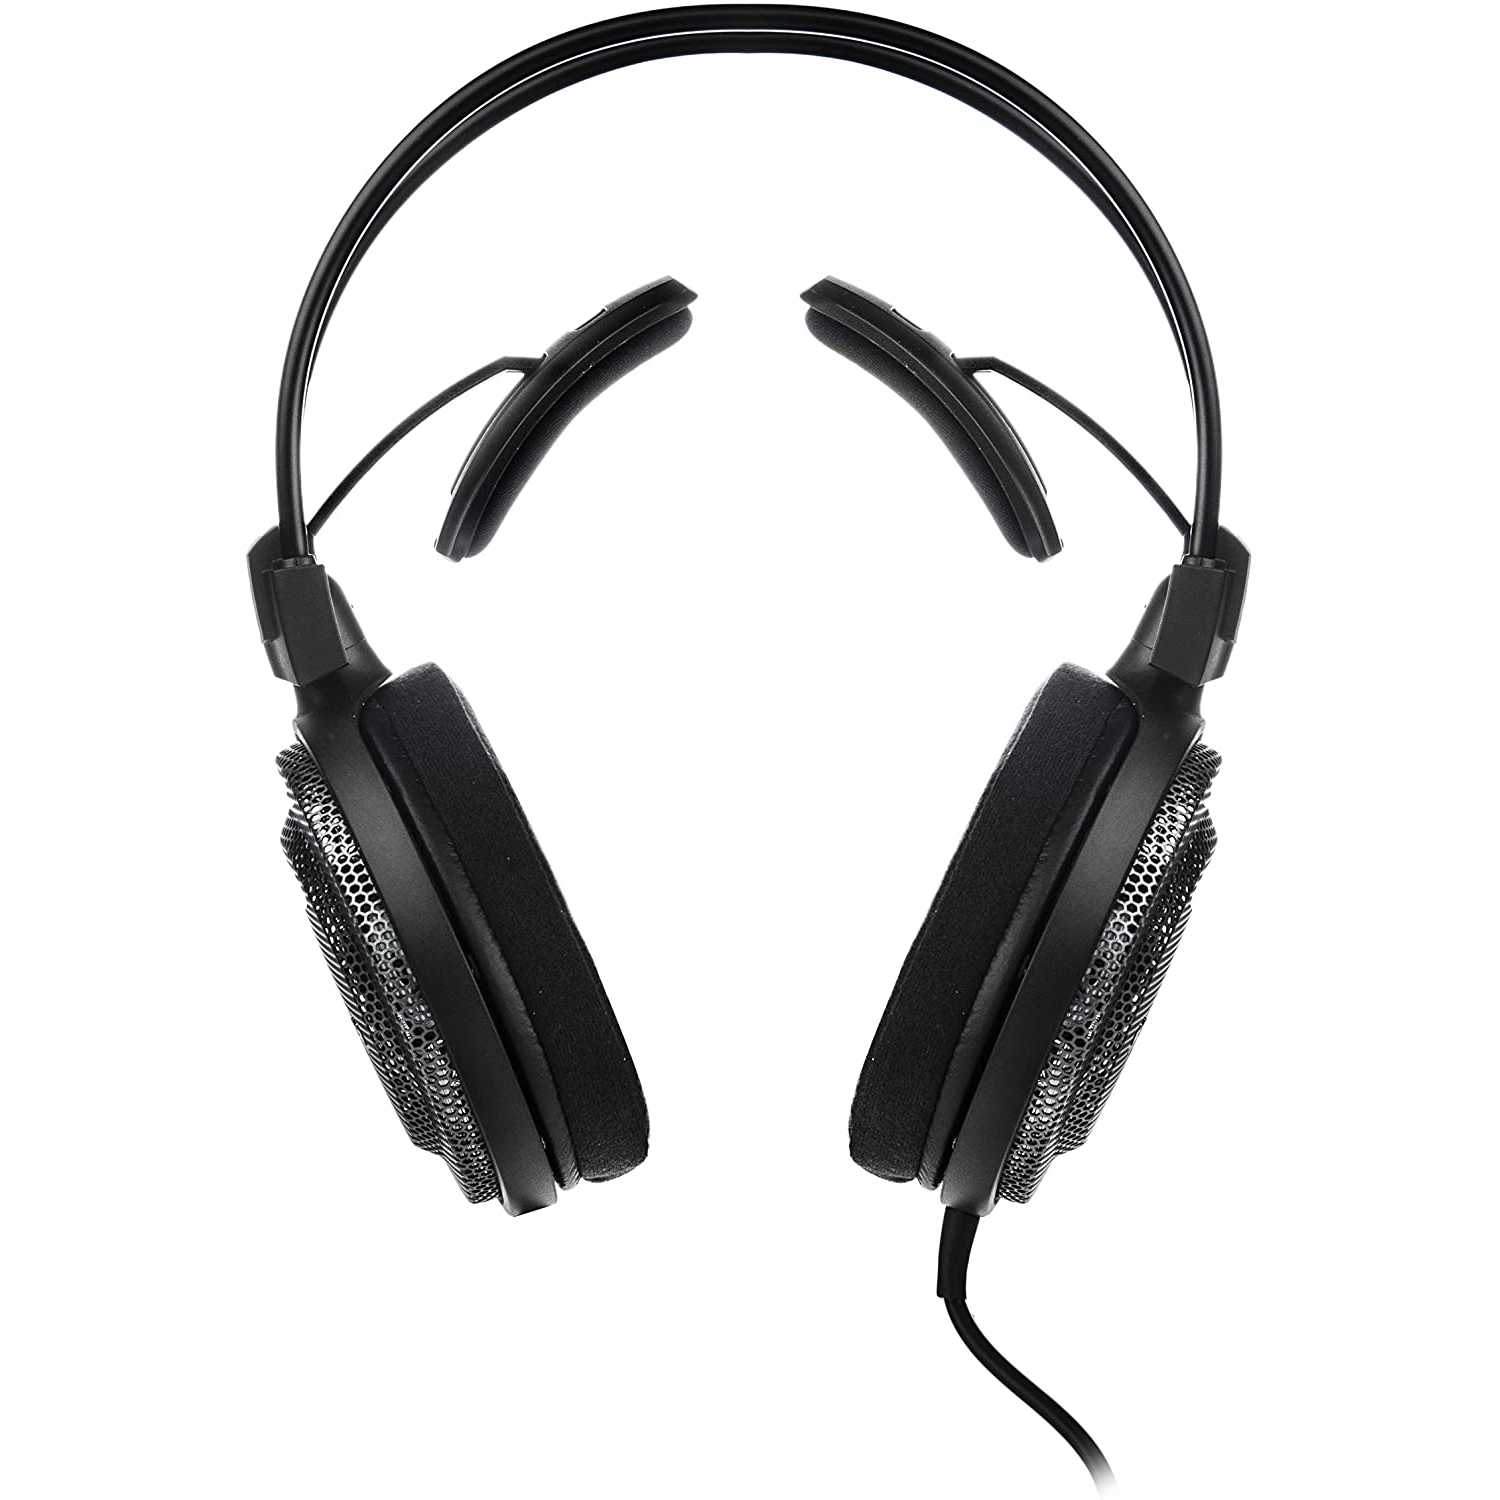 Audio-Technica Consumer ATH-AD700X casque en plein air audiophile